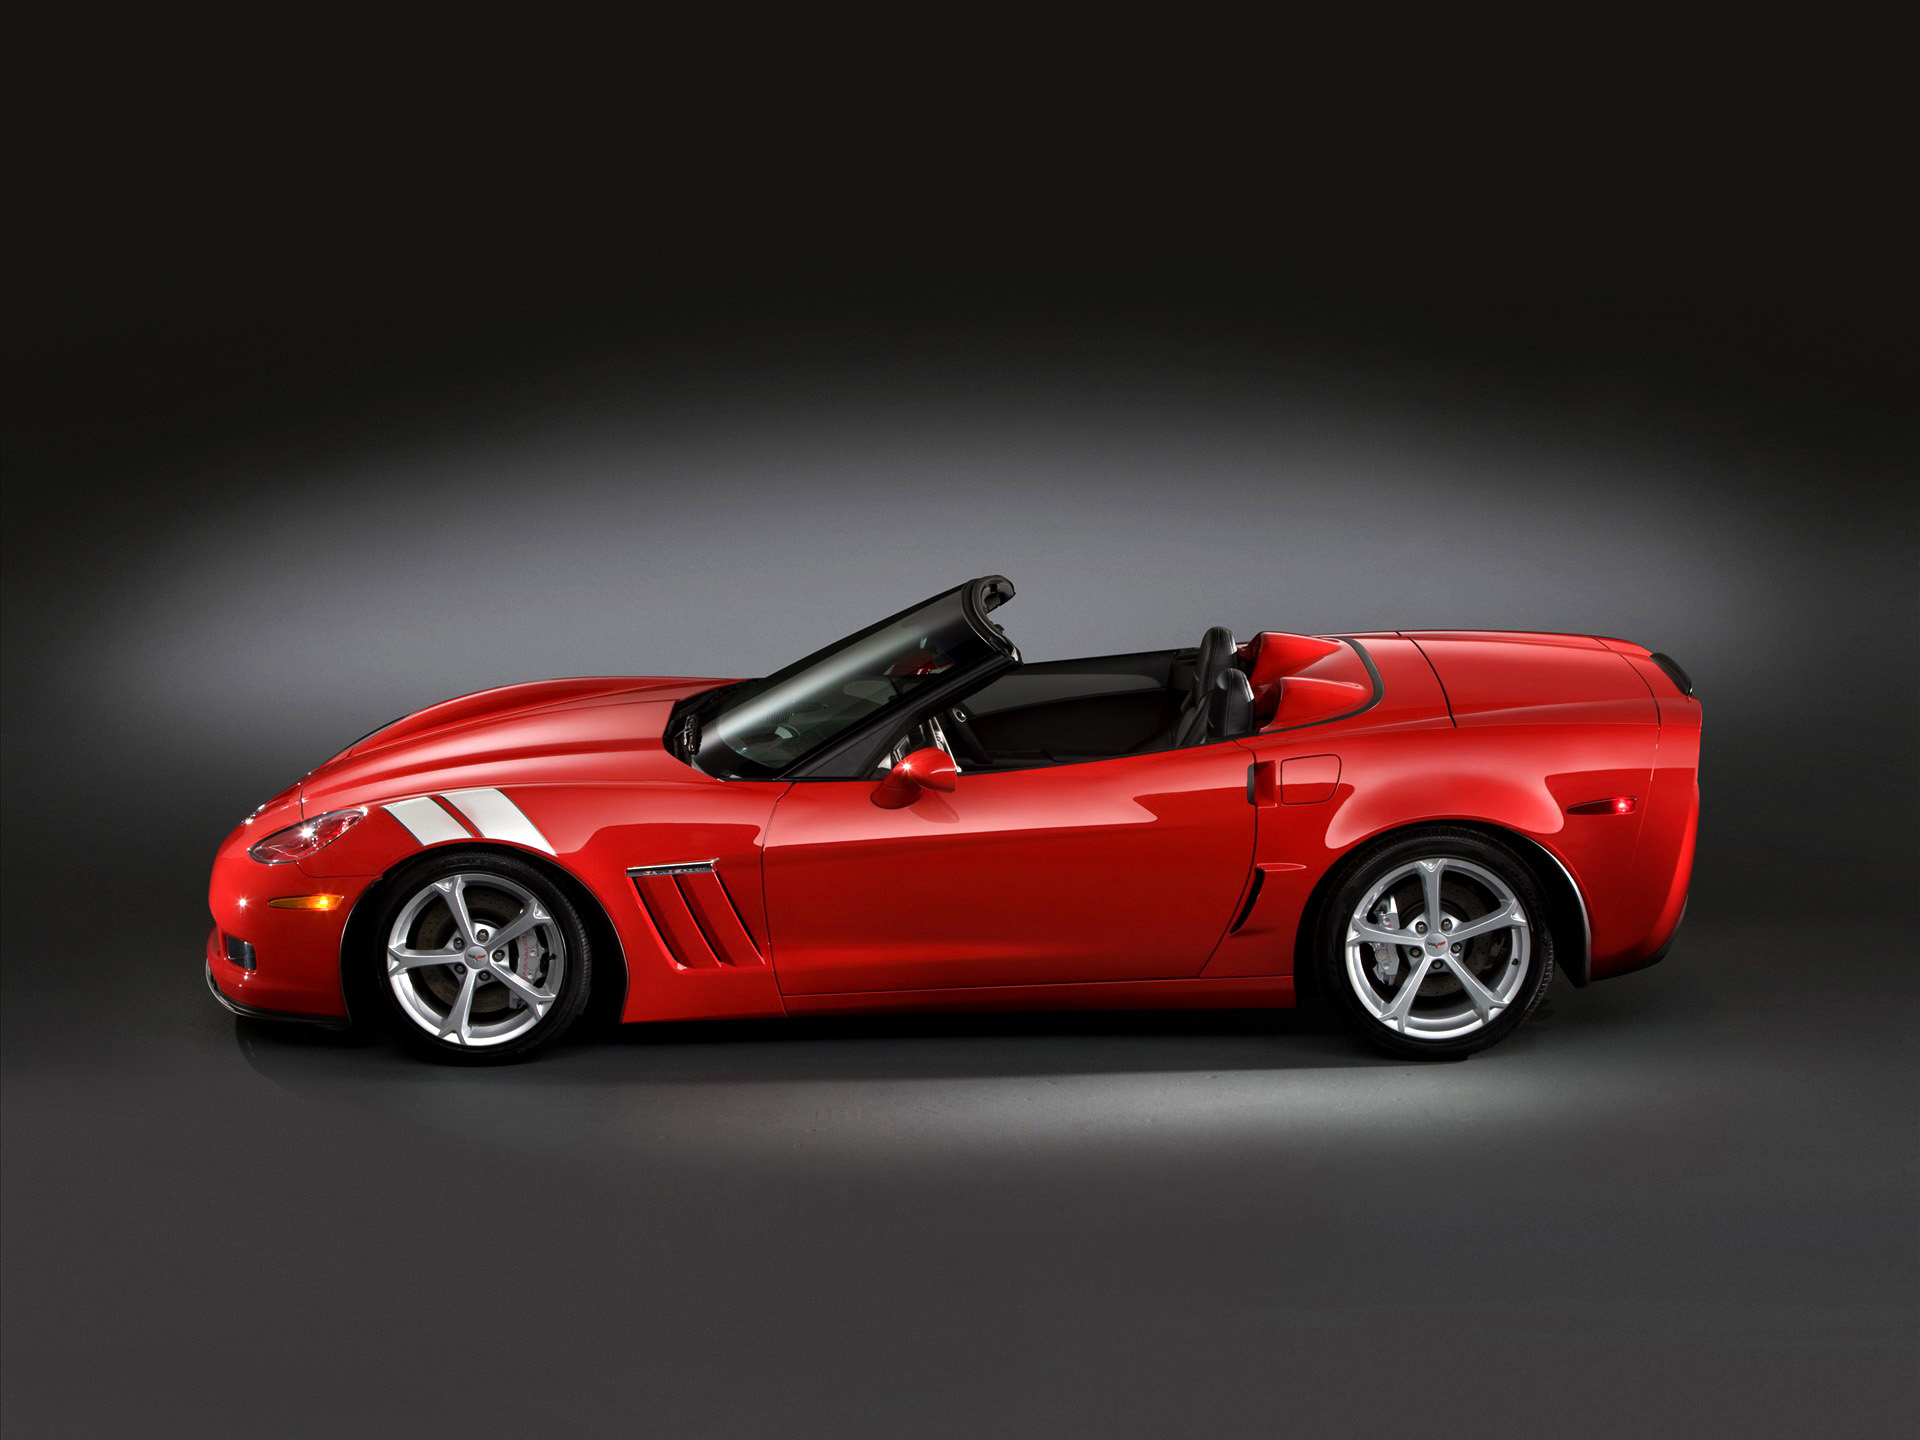 Corvette Of The Day: 2010 Chevrolet Corvette Grand Sport Convertible